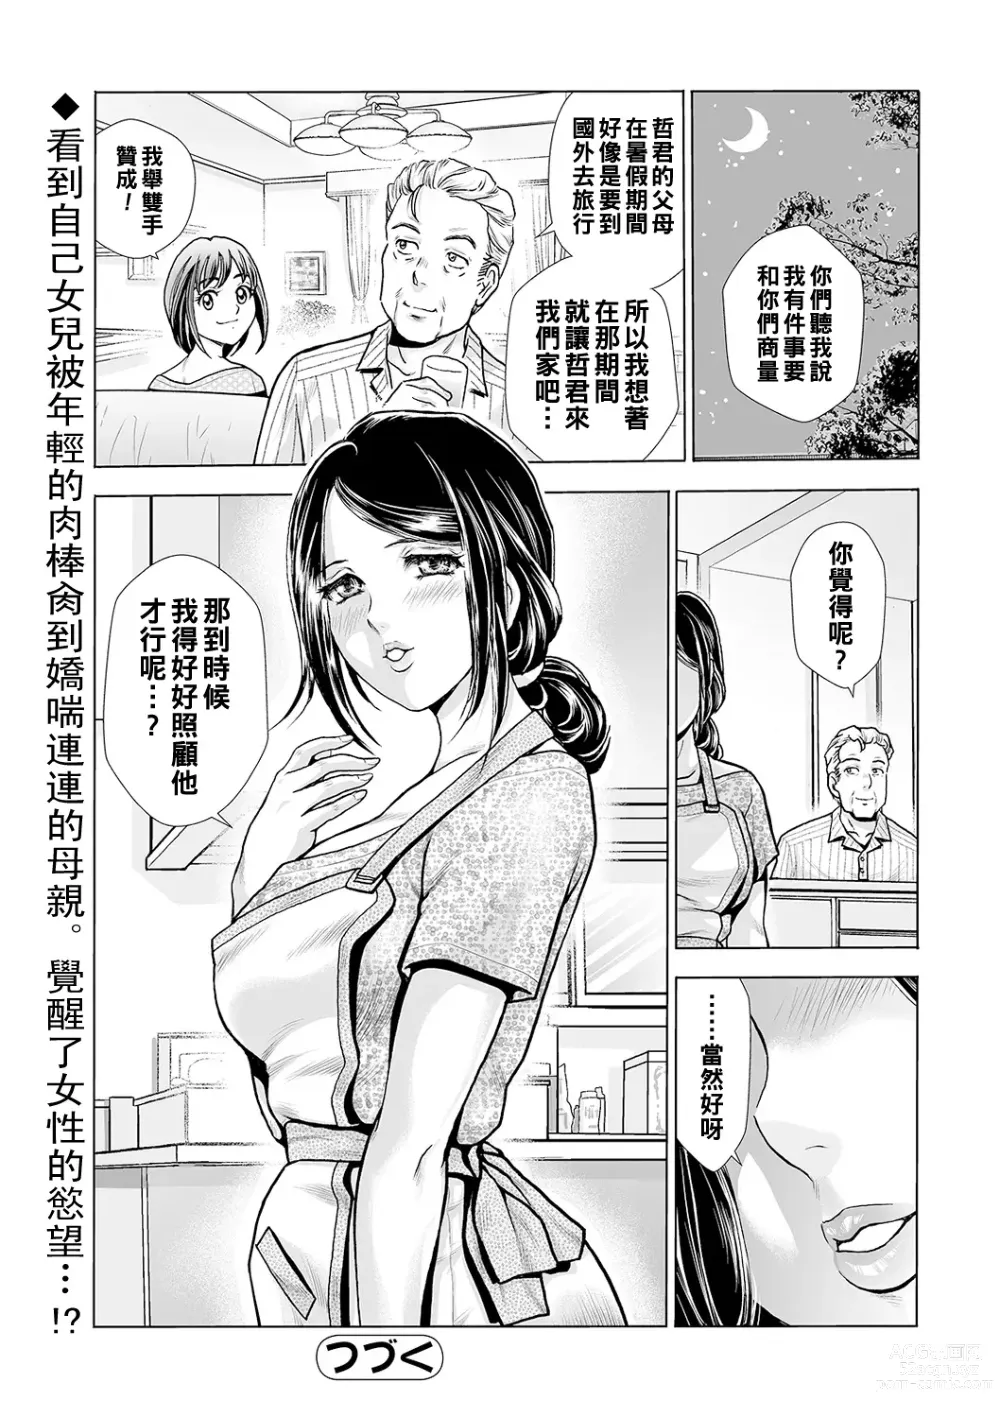 Page 24 of manga Hahaoya no Kamen ~Musume Kareshi o NTR~ Scene. 1